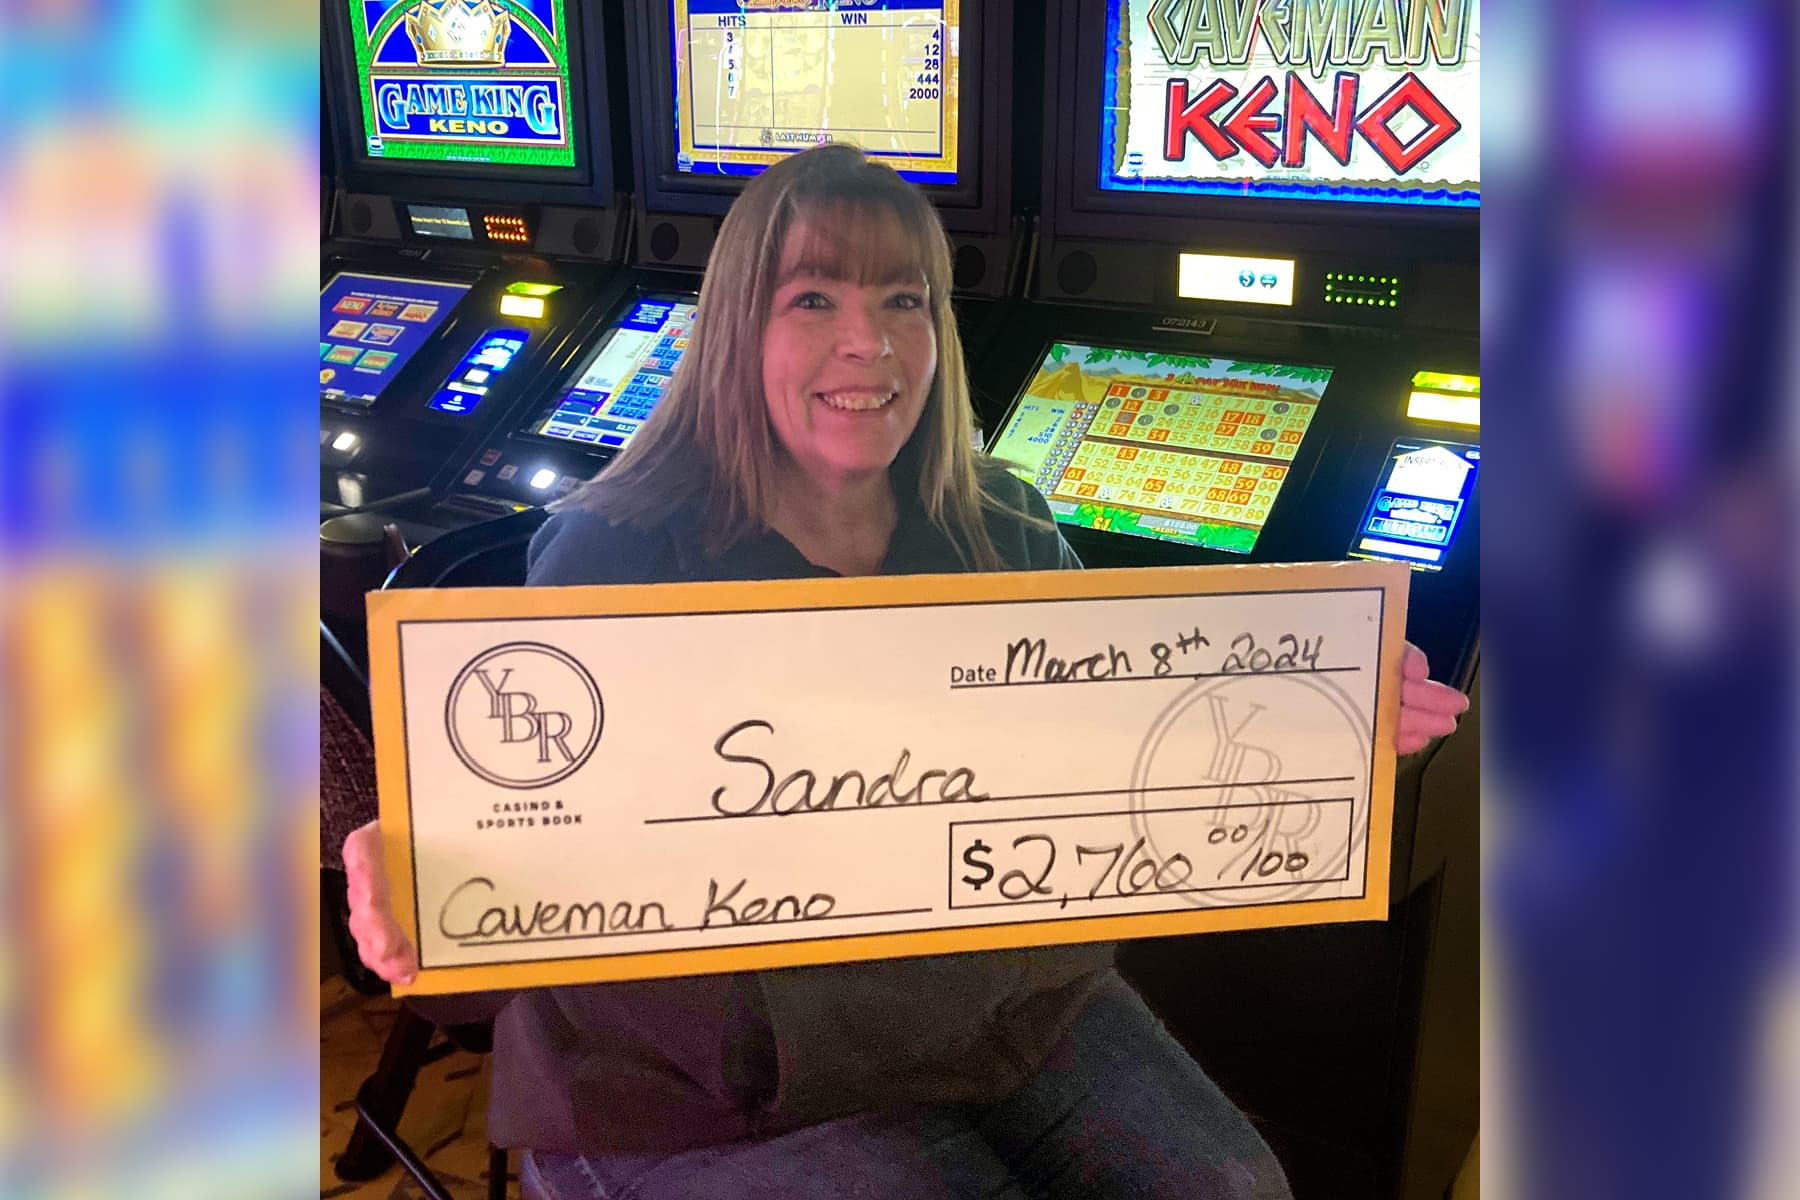 Sandra won $2,760